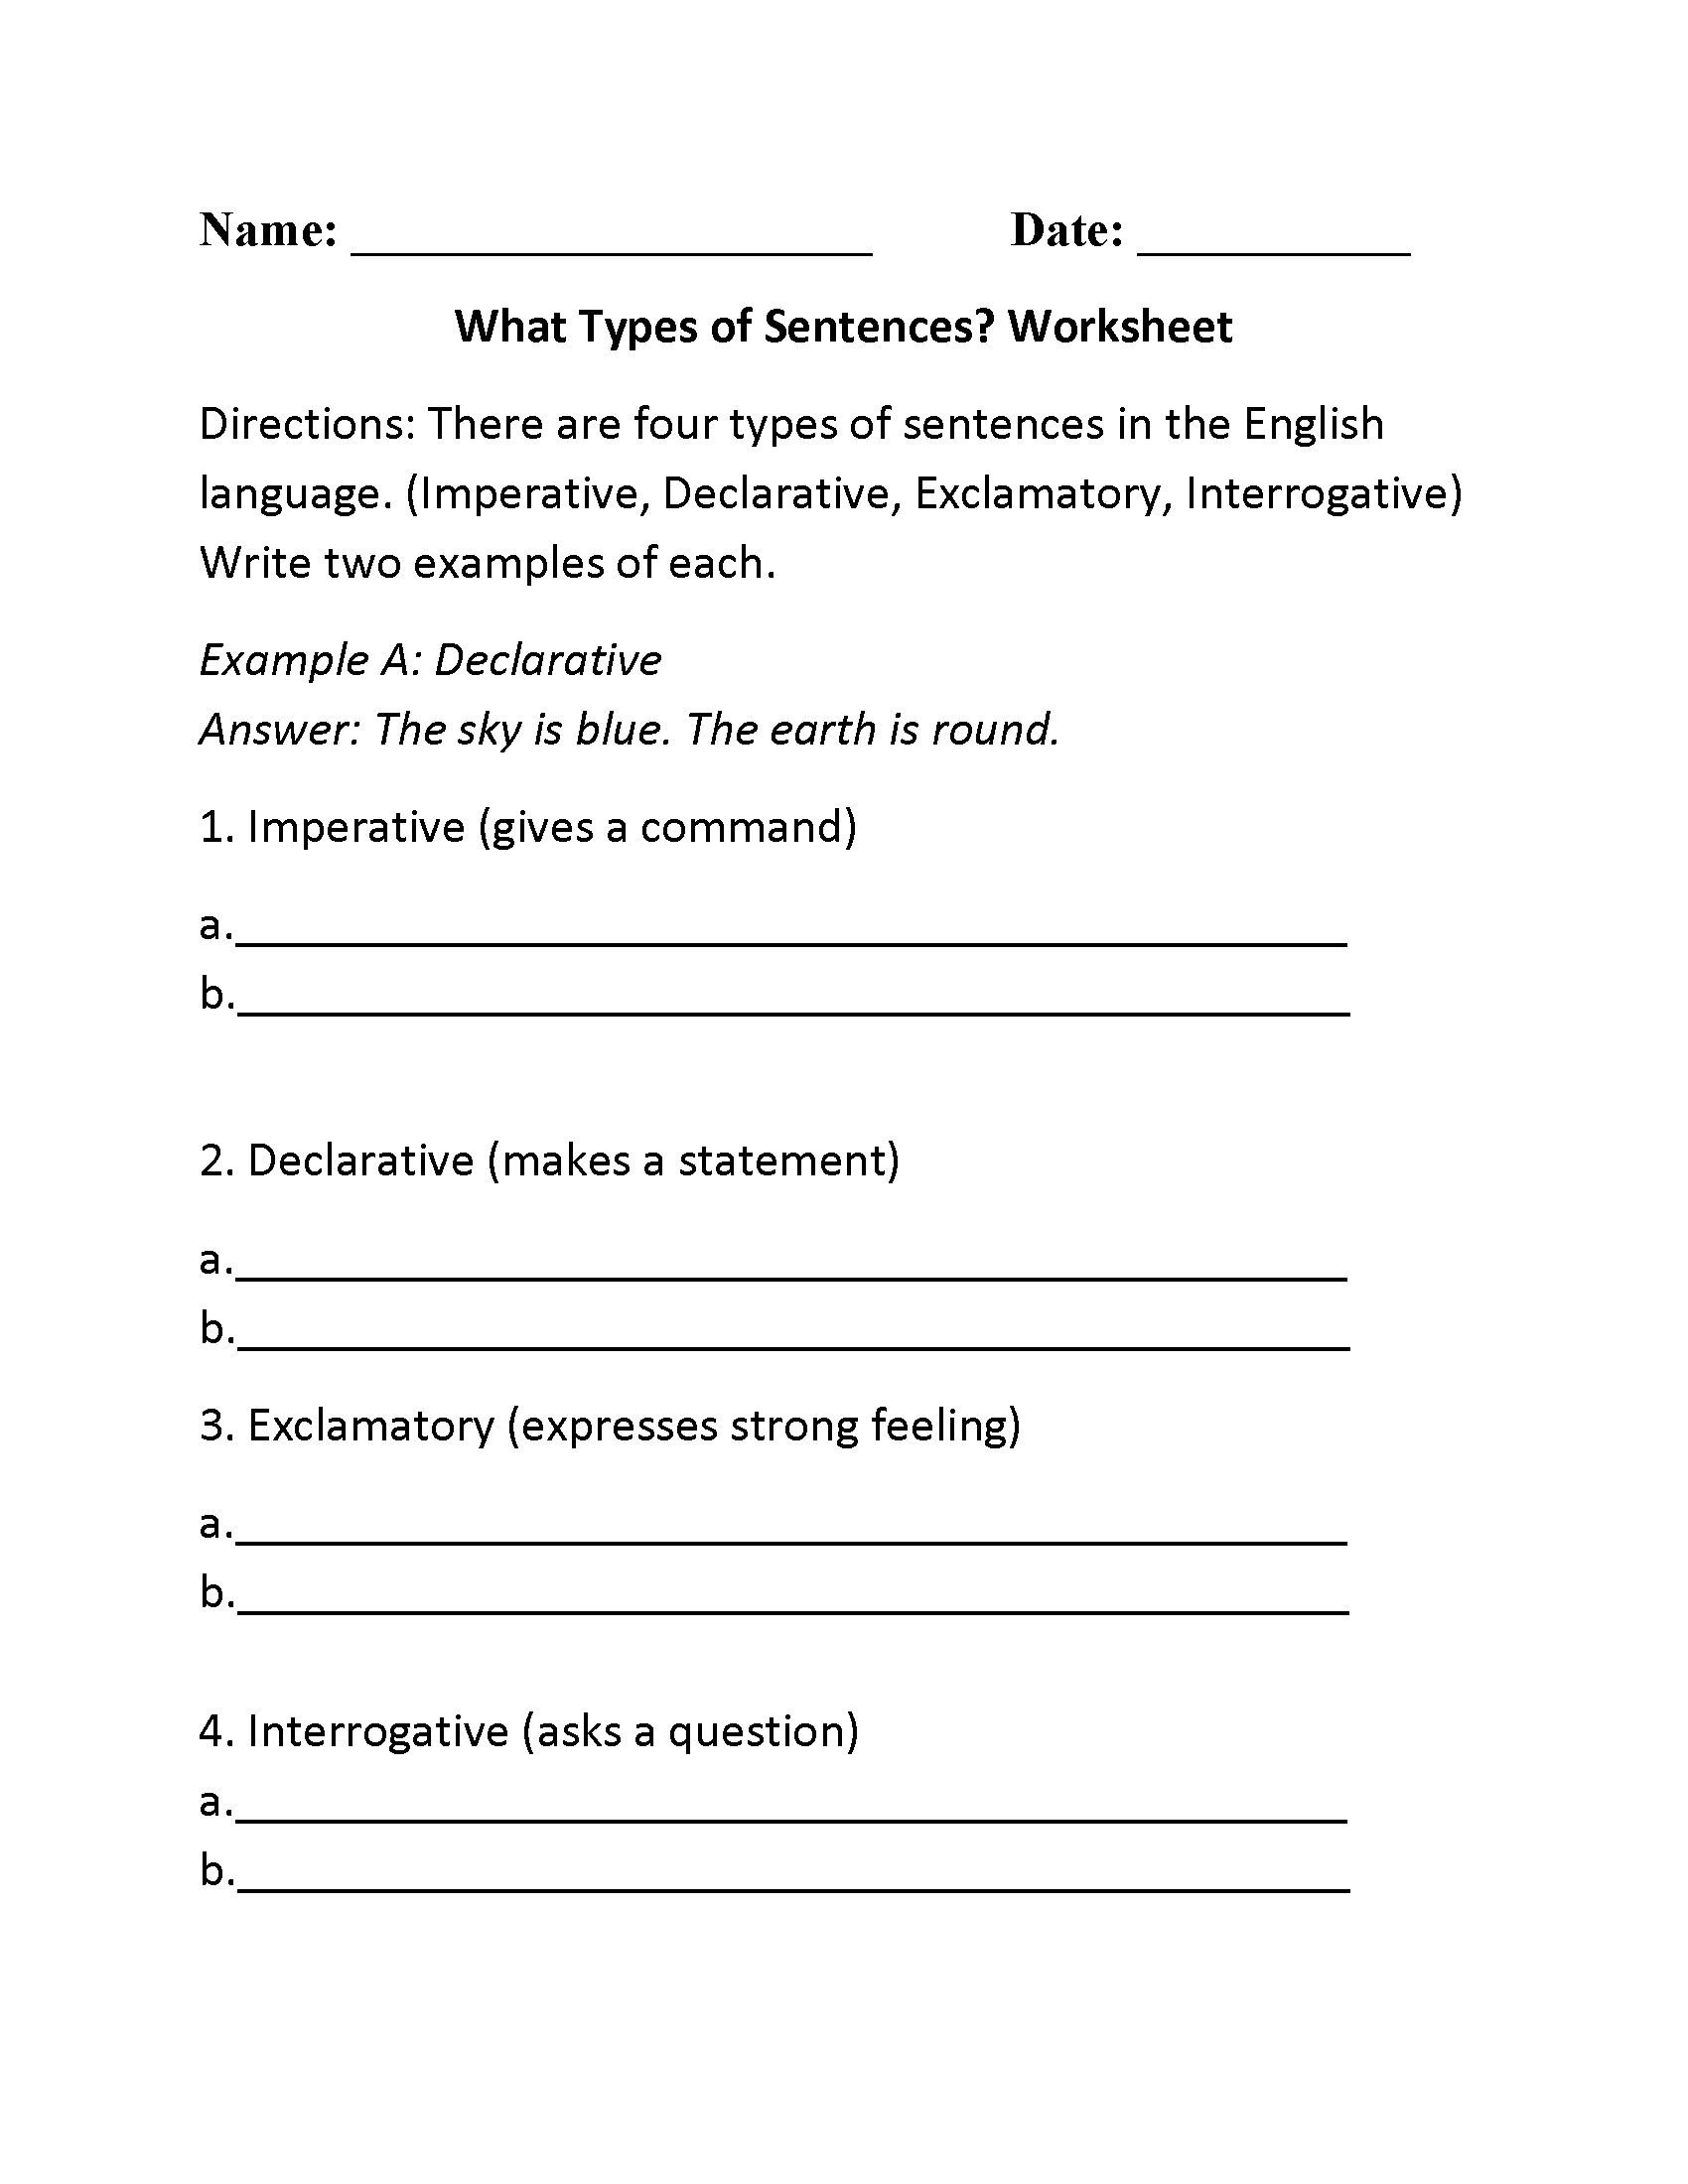 Writing Sentences Worksheets For 1St Grade  Briefencounters Together With Writing Sentences Worksheets For 1St Grade